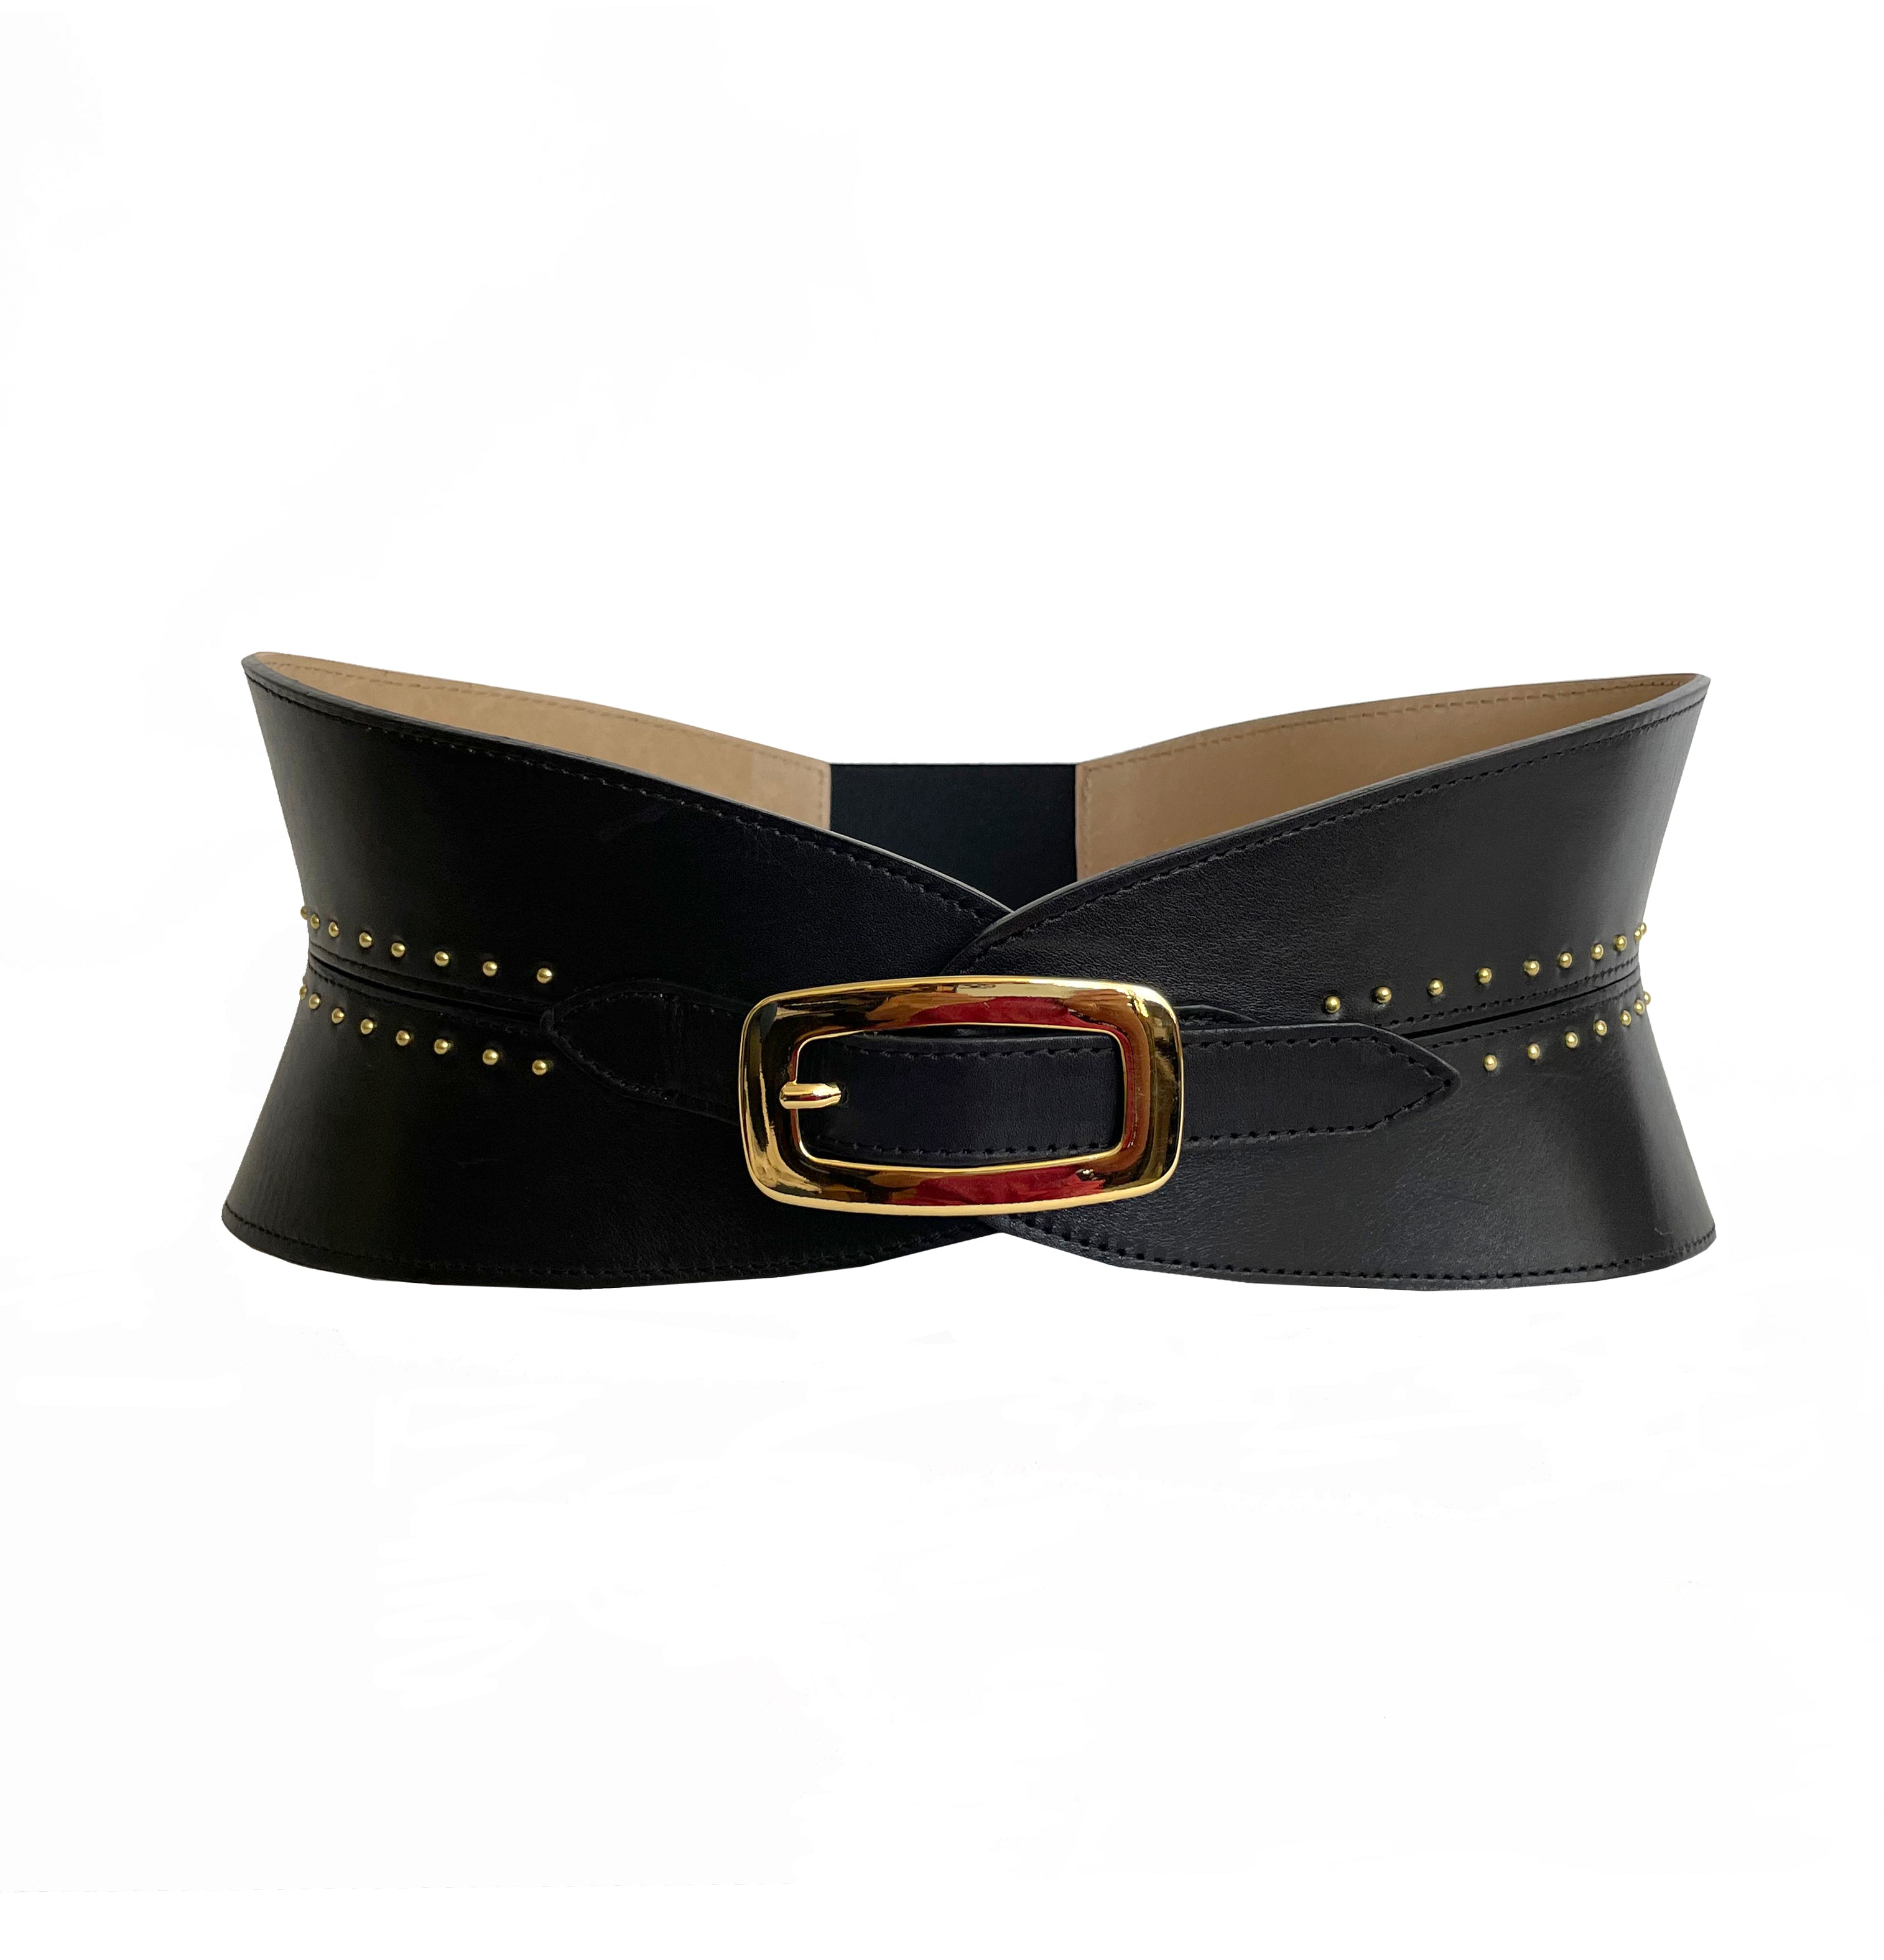 Laila Corset - Black Italian Leather Corset Belt With Gold Buckle